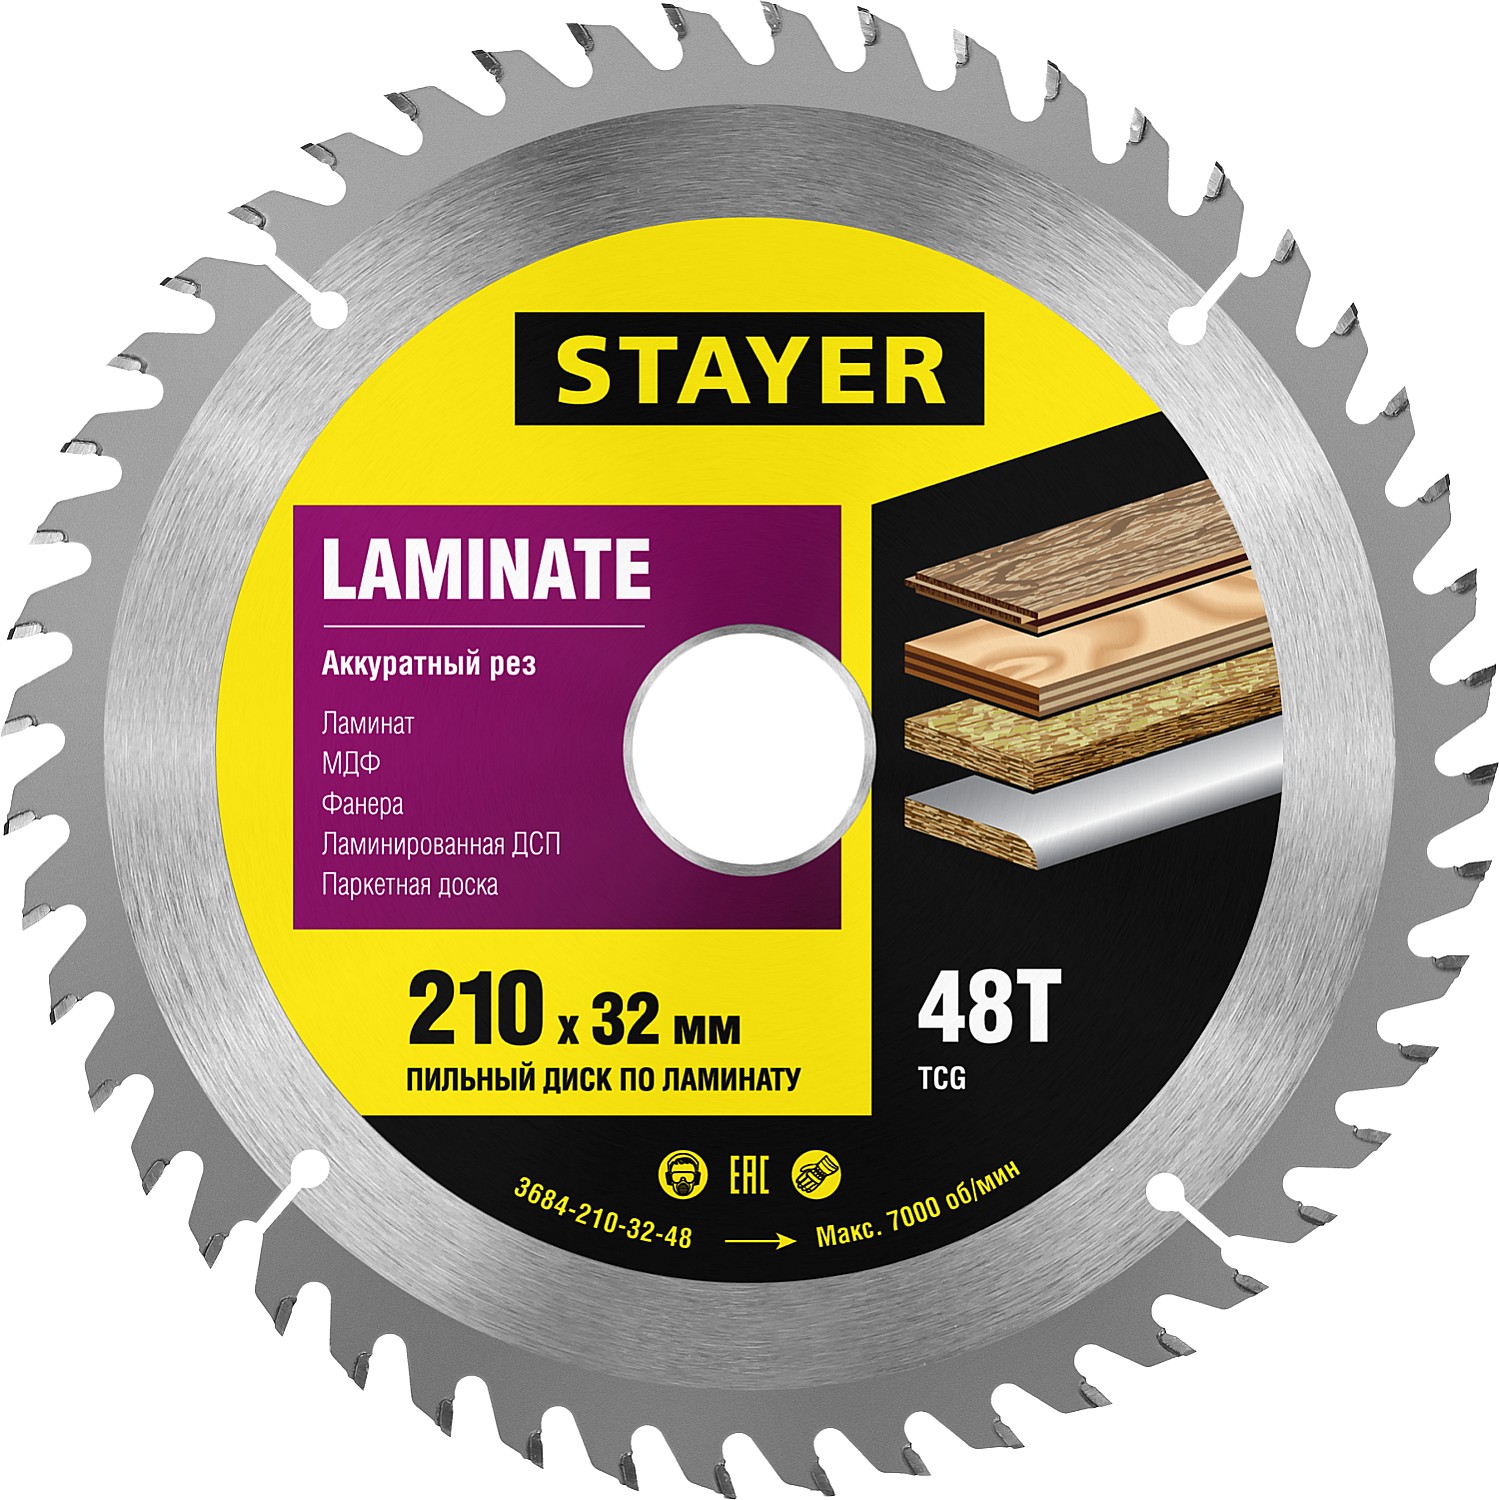 Пильный диск по ламинату 210х32 мм 48 зубьев Stayer Laminate line 3684-210-32-48 фото